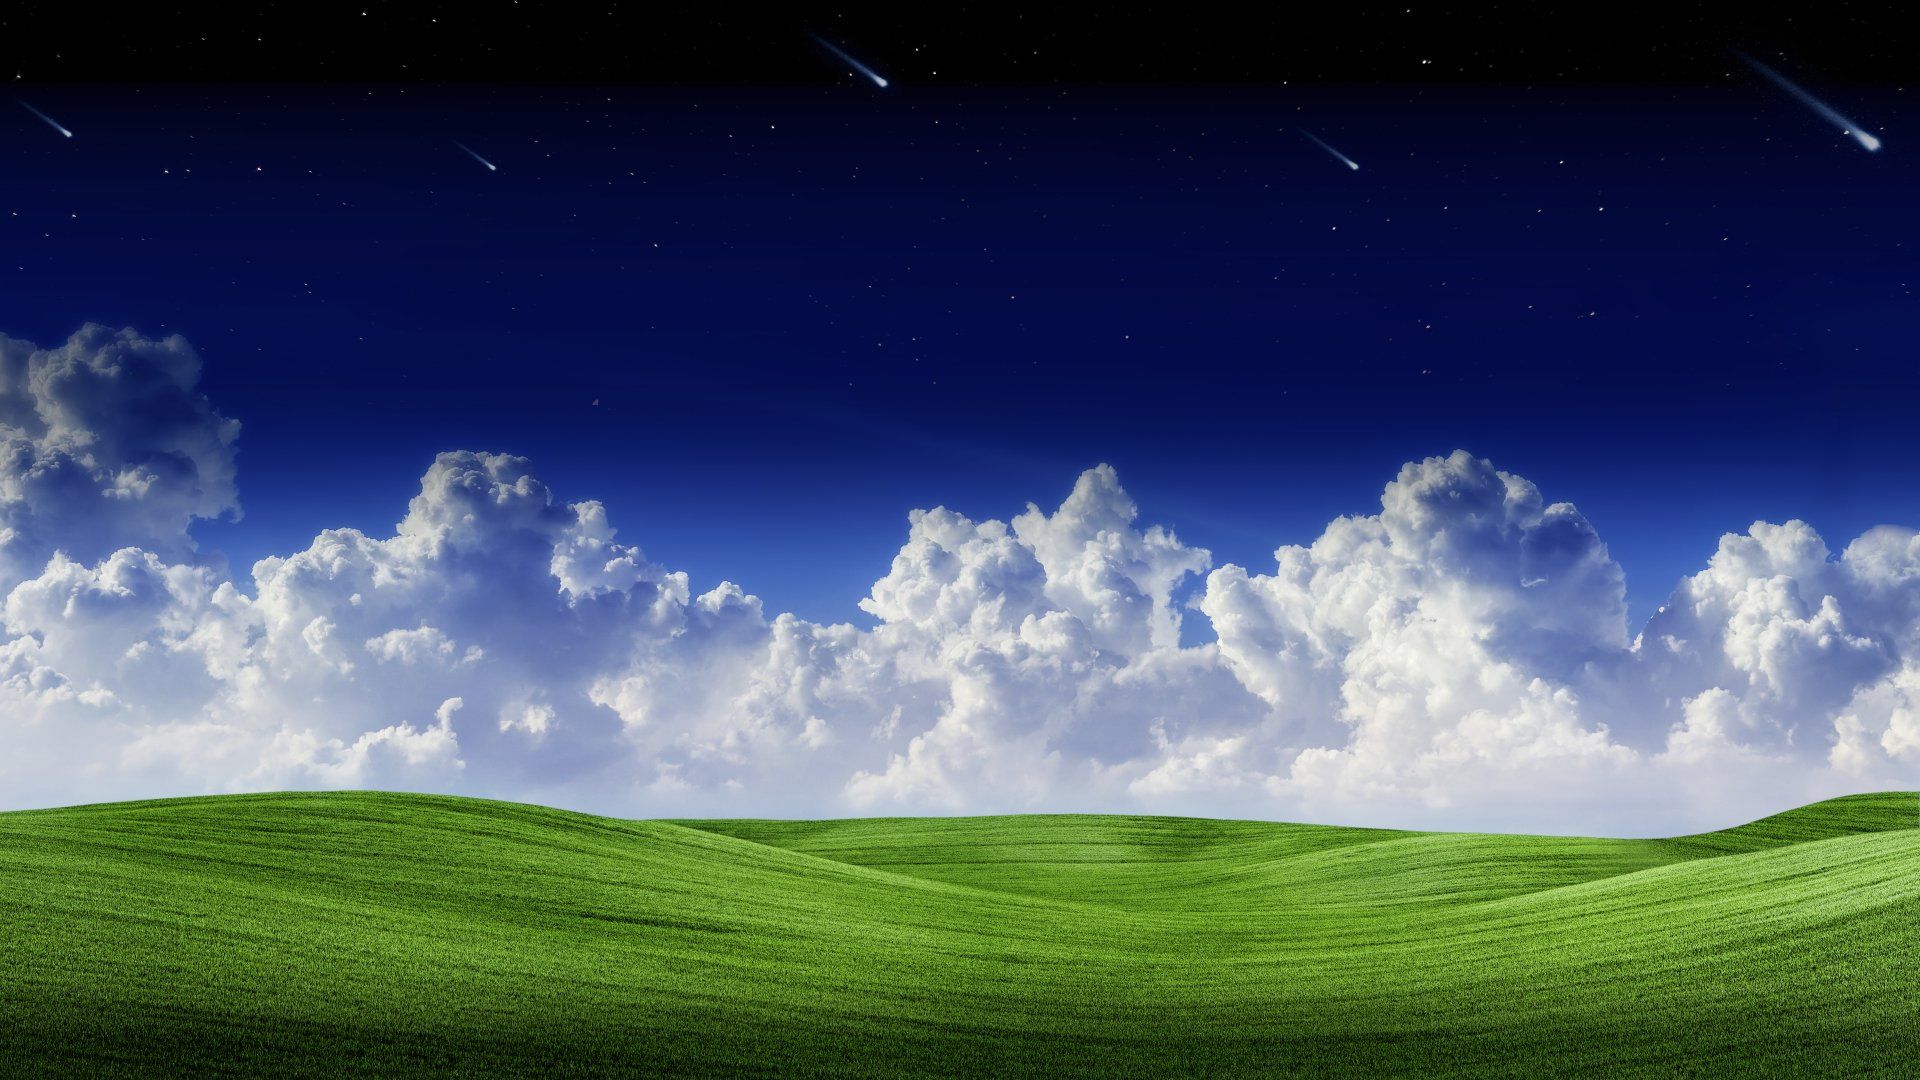 landscape-clouds-green-grass-starry-sky-falling-stars-blue-7680x4320-6355.jpg